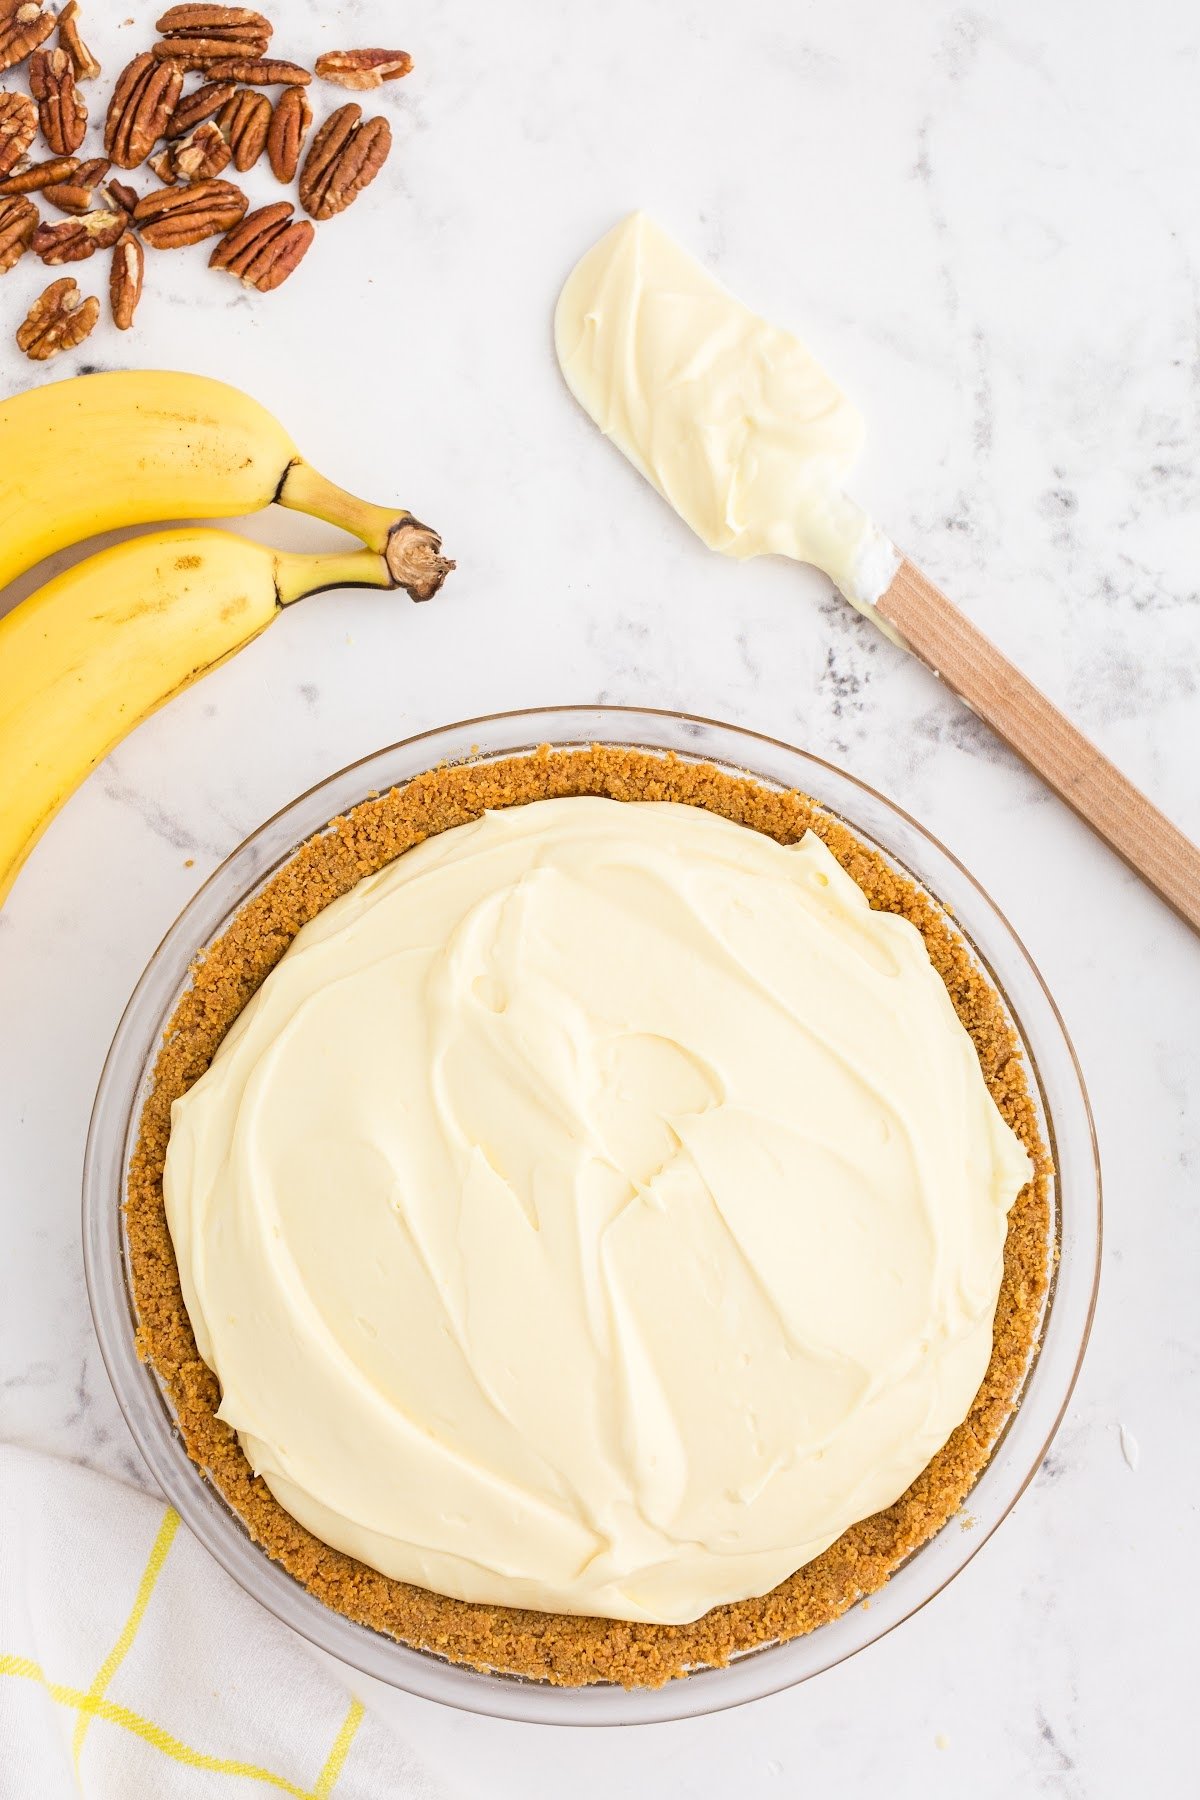 Spread the banana cream pie filling into the graham cracker crust.